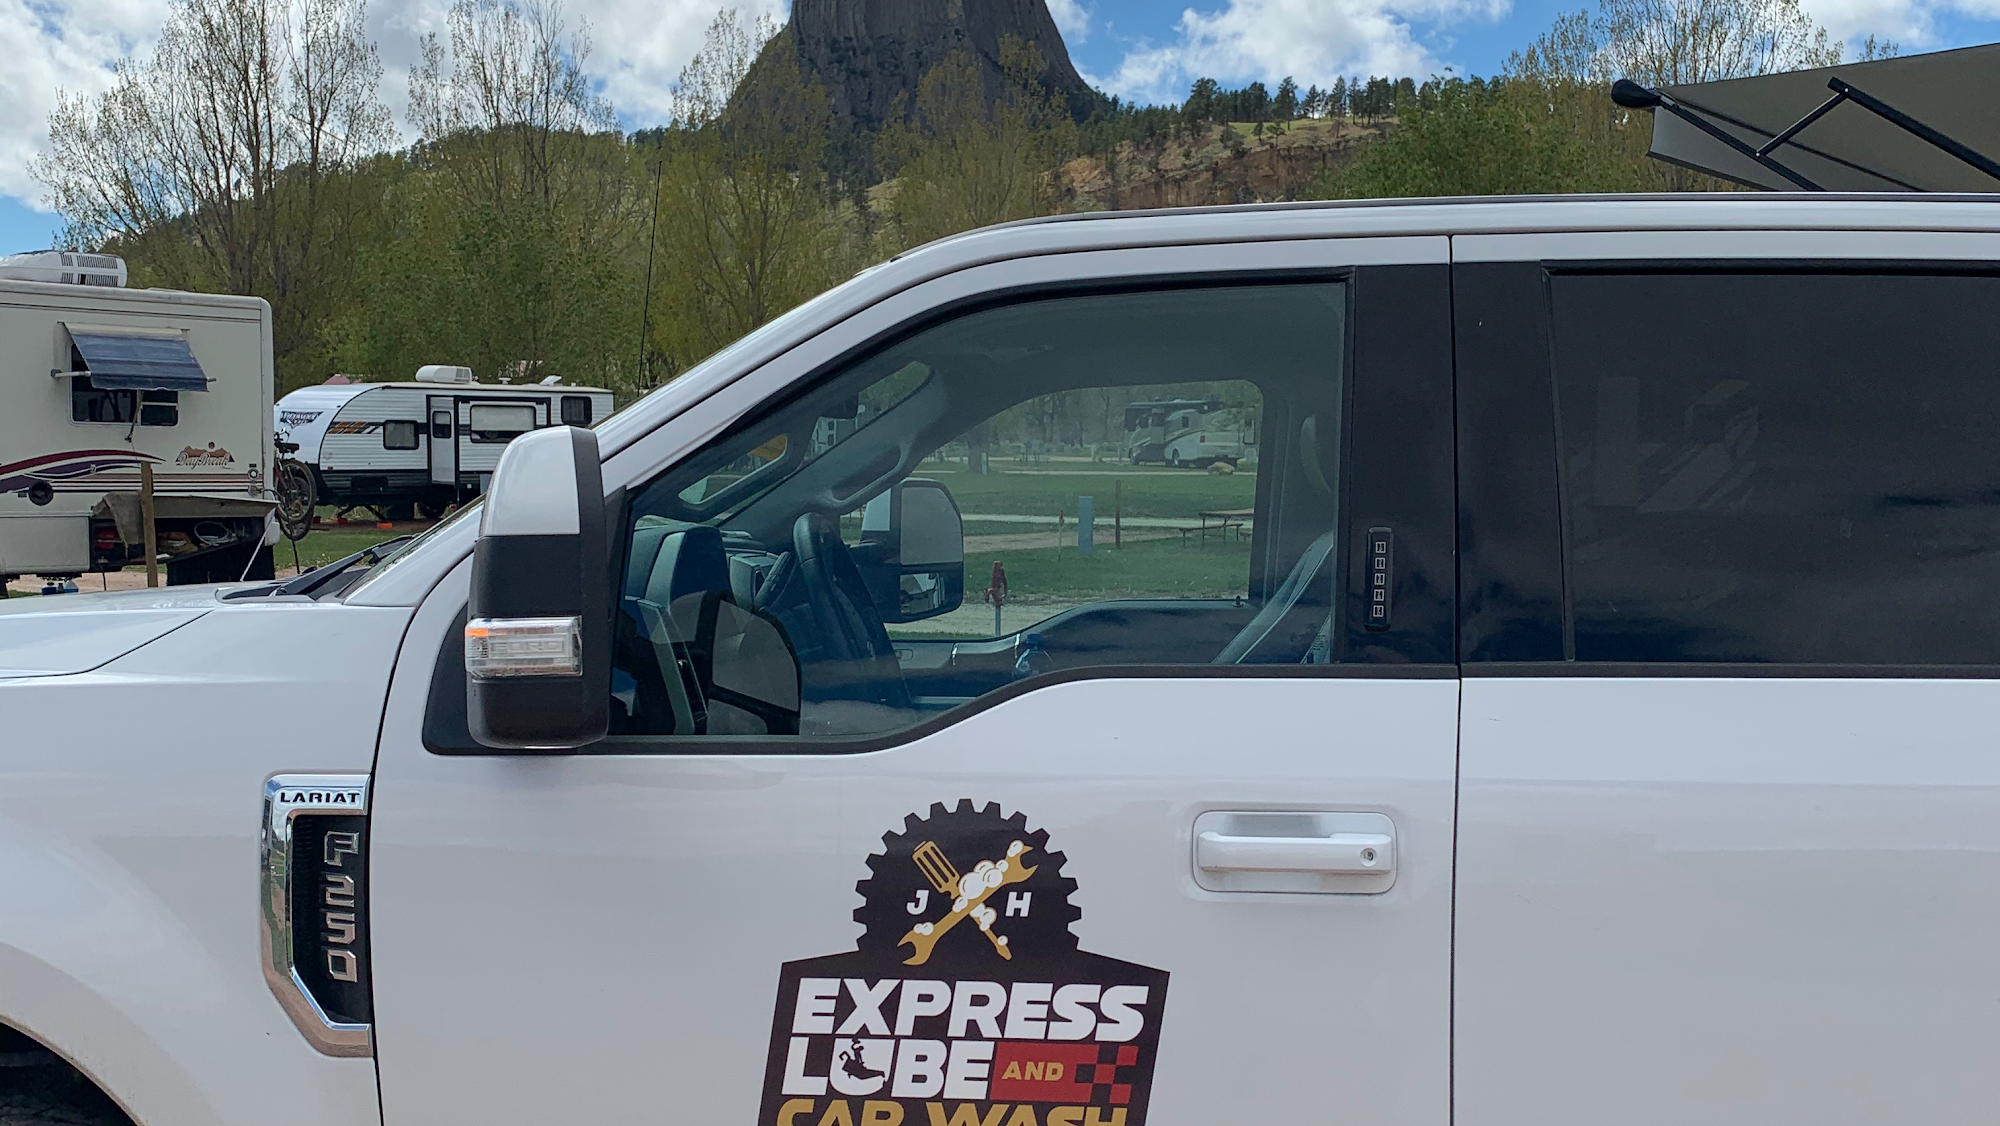 Jackson Hole Express Lube and Car Wash